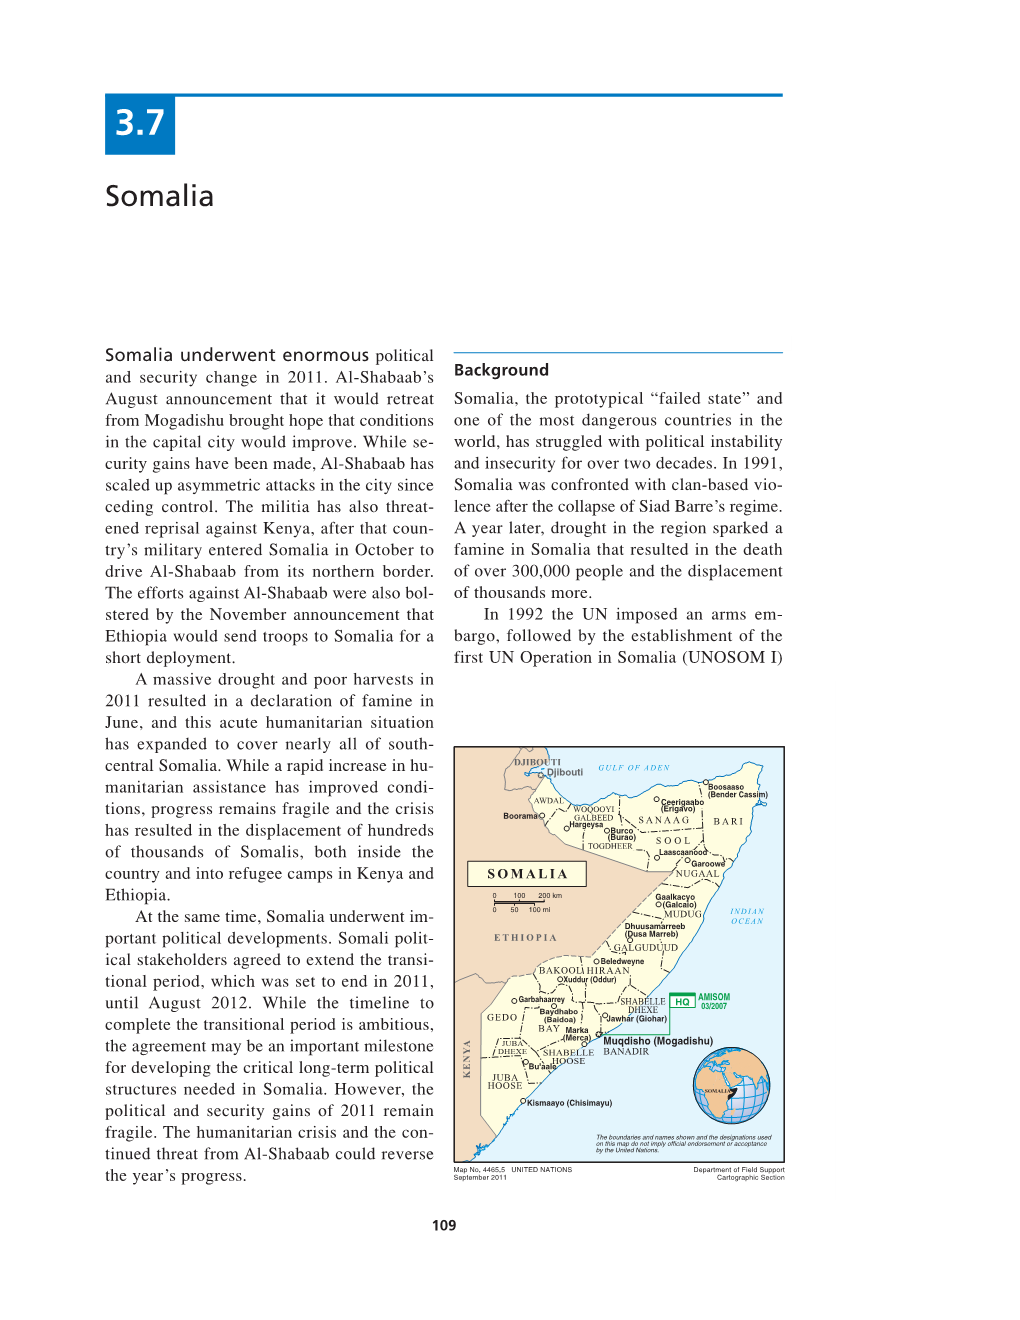 Somalia Mission Notes